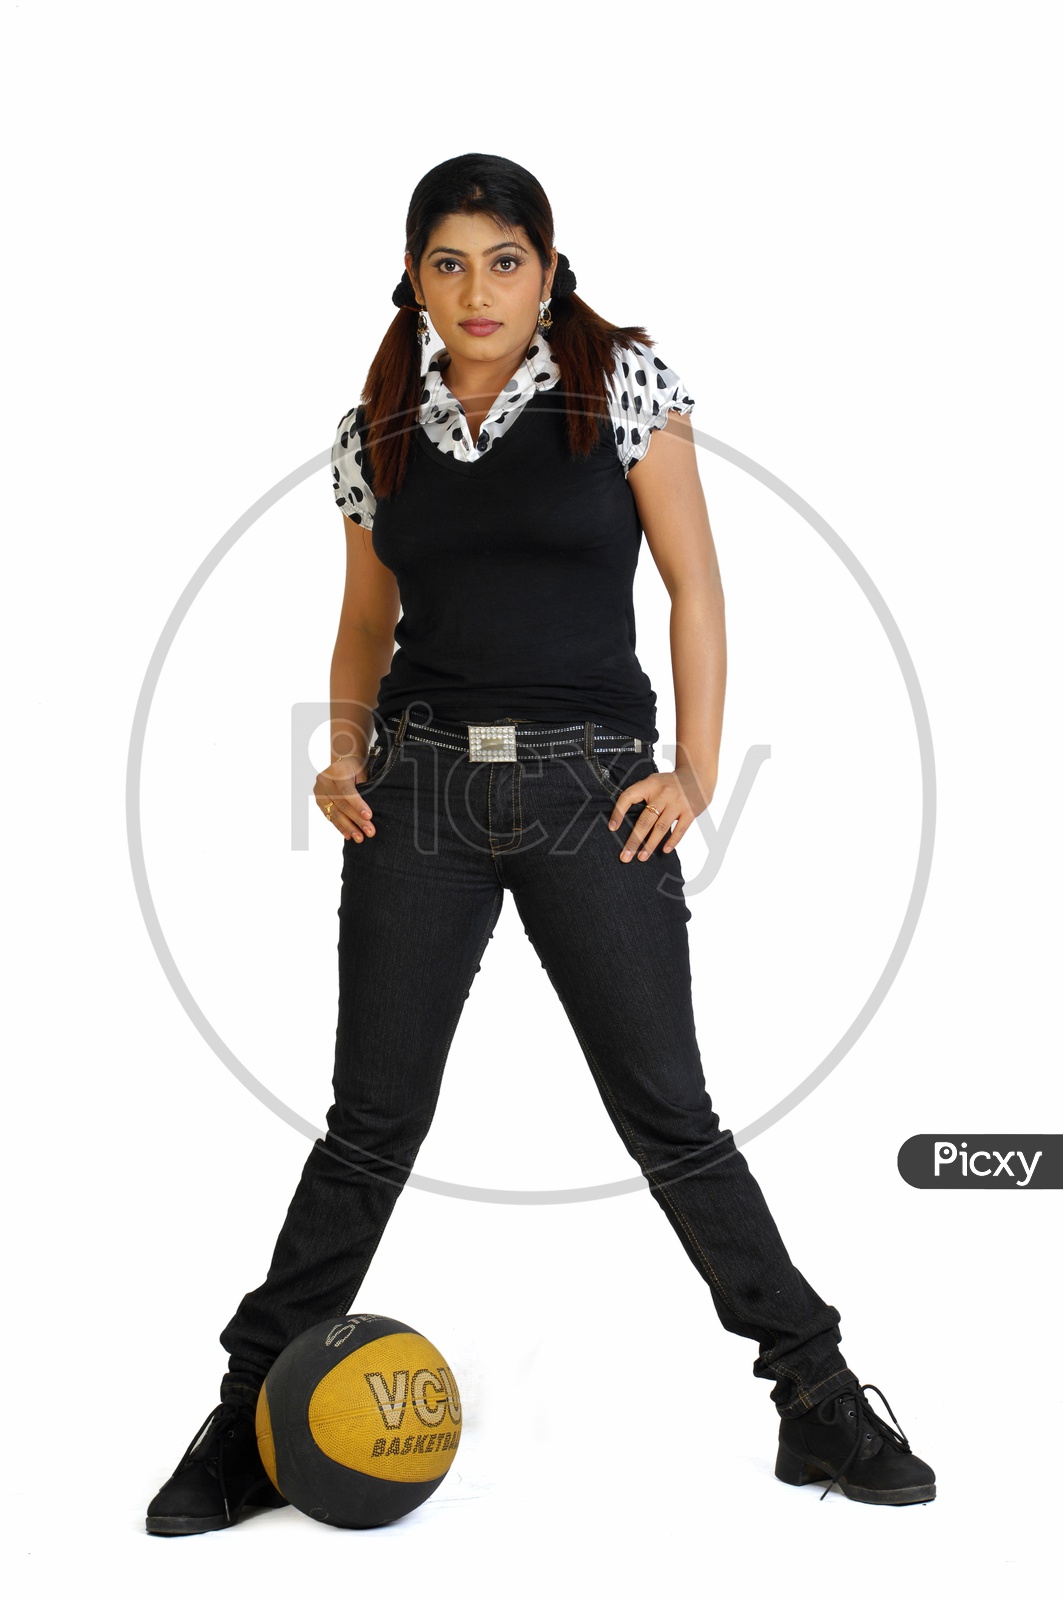 Indian Woman wearing jeans posing